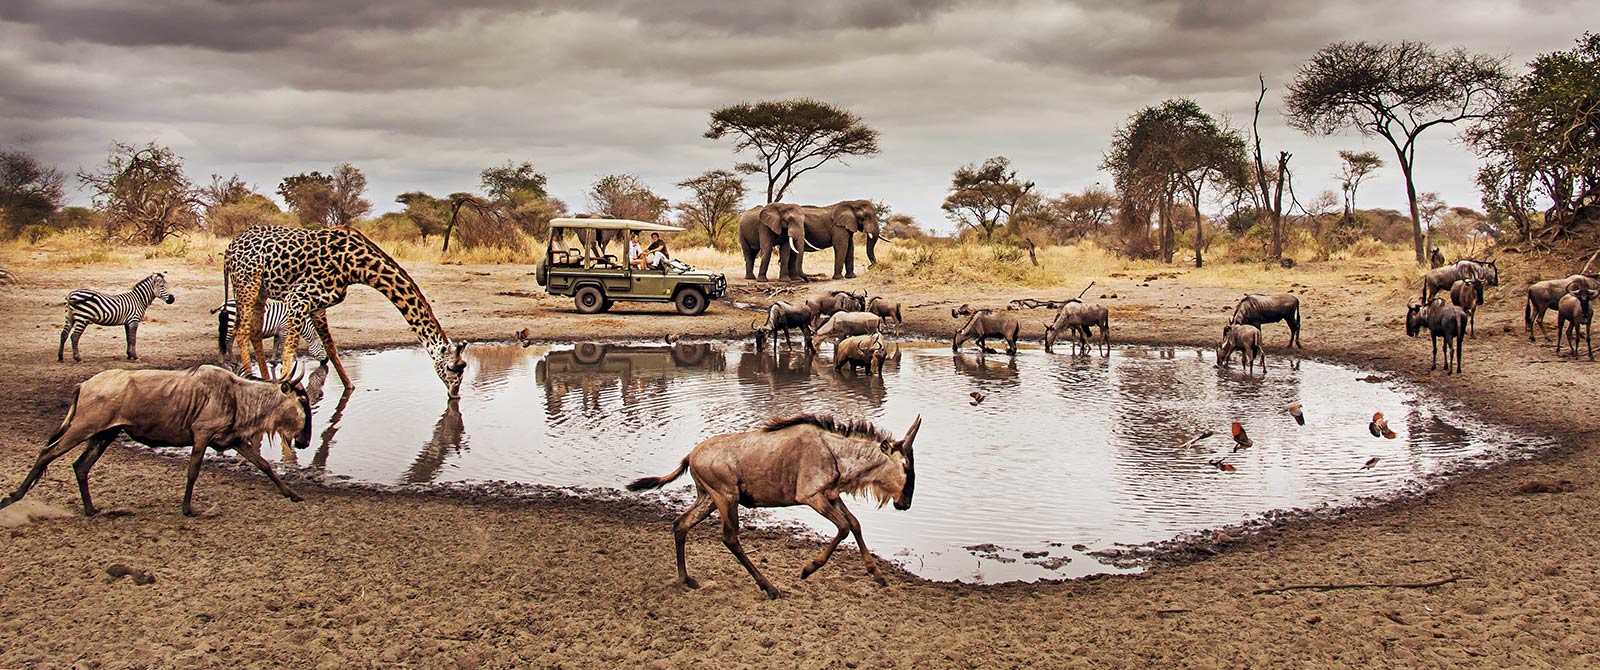 Serengeti National Park Wildlife | Explore Wildlife in Serengeti